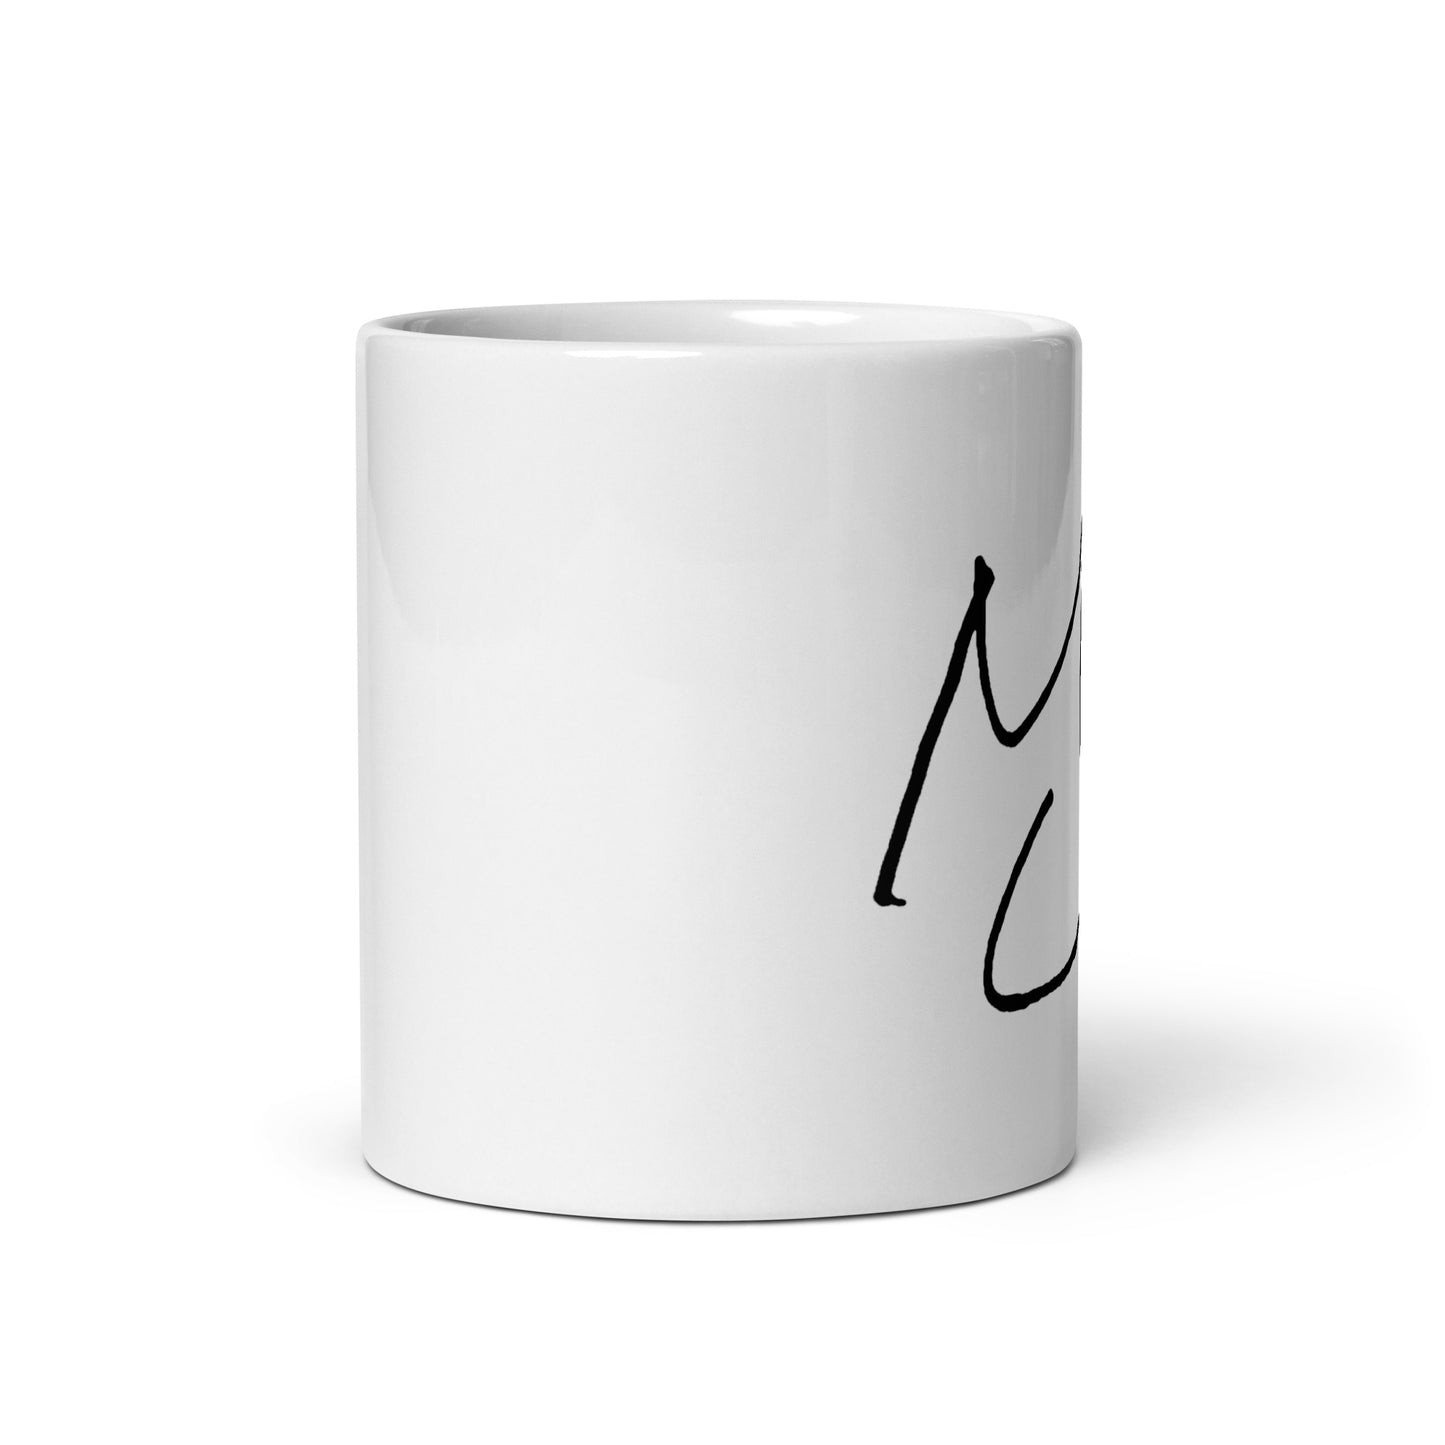 SEVENTEEN Mingyu, Kim Mingyu Signature Ceramic Mug